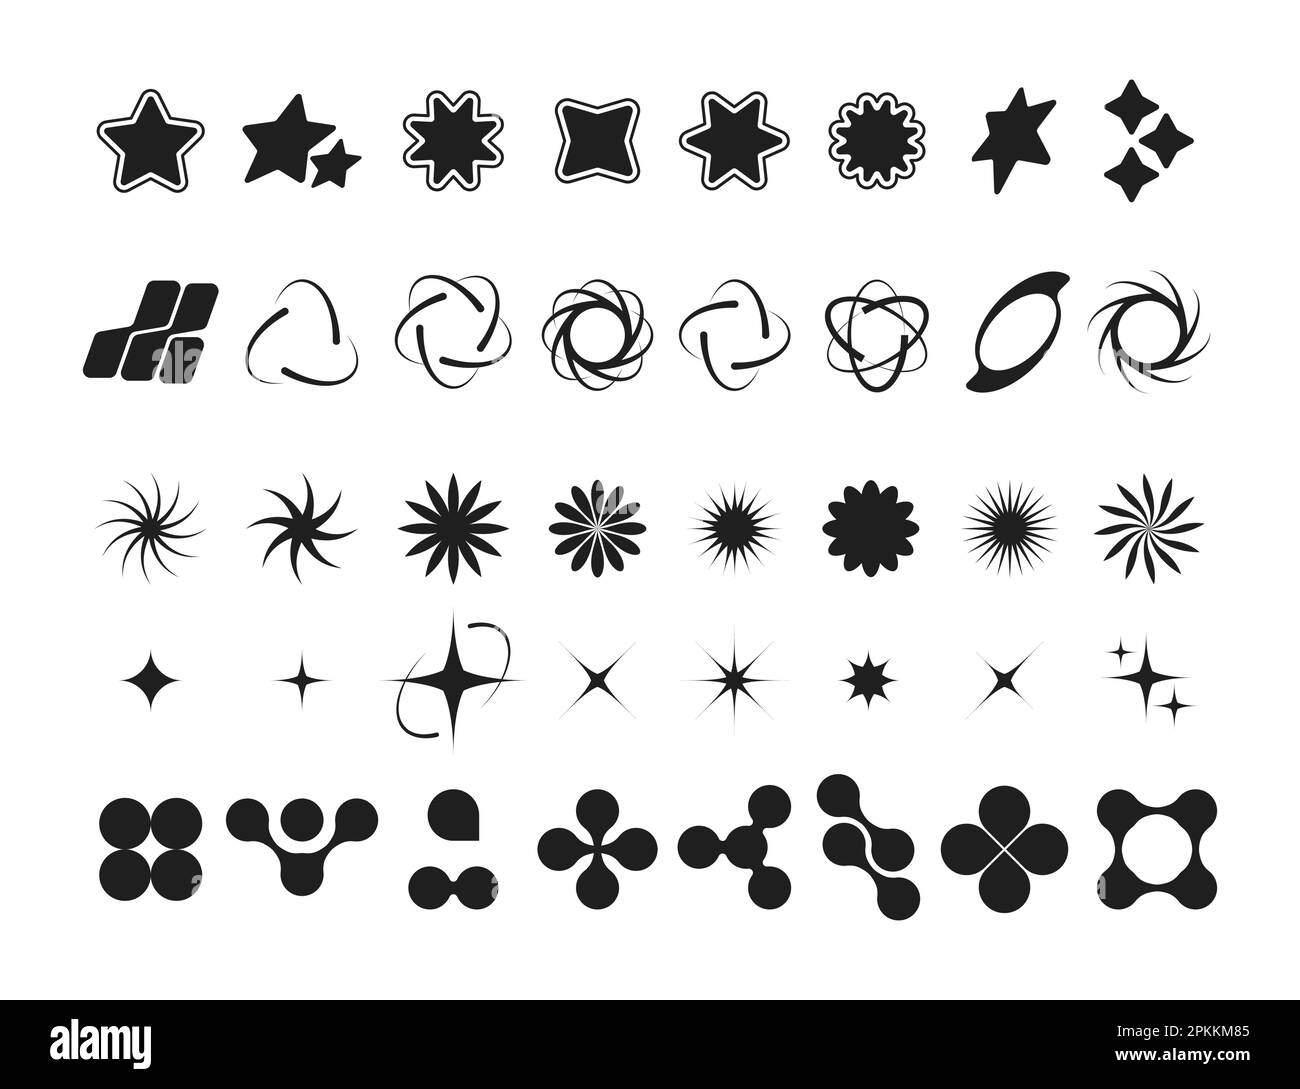 Y2k black symbols. Retro futuristic geometric elements, 70s 80s modern decorative symbols globe star arrow planet. Vector isolated set. Shining stars, cosmos or galaxy elements, geometric icons Stock Vector